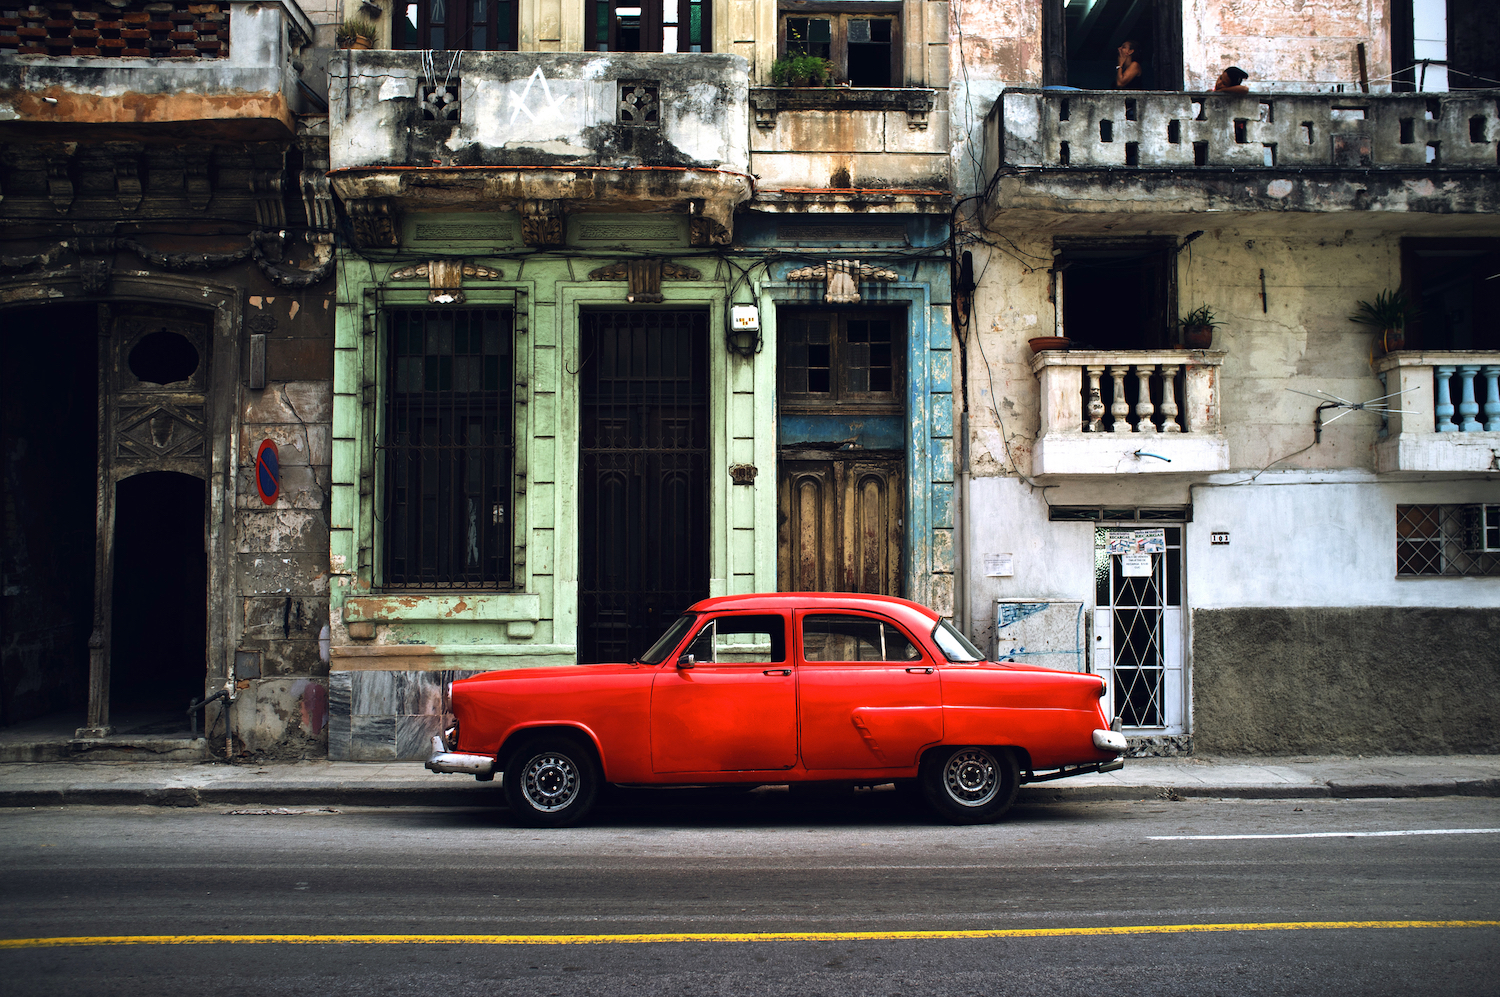 Cuban street scene